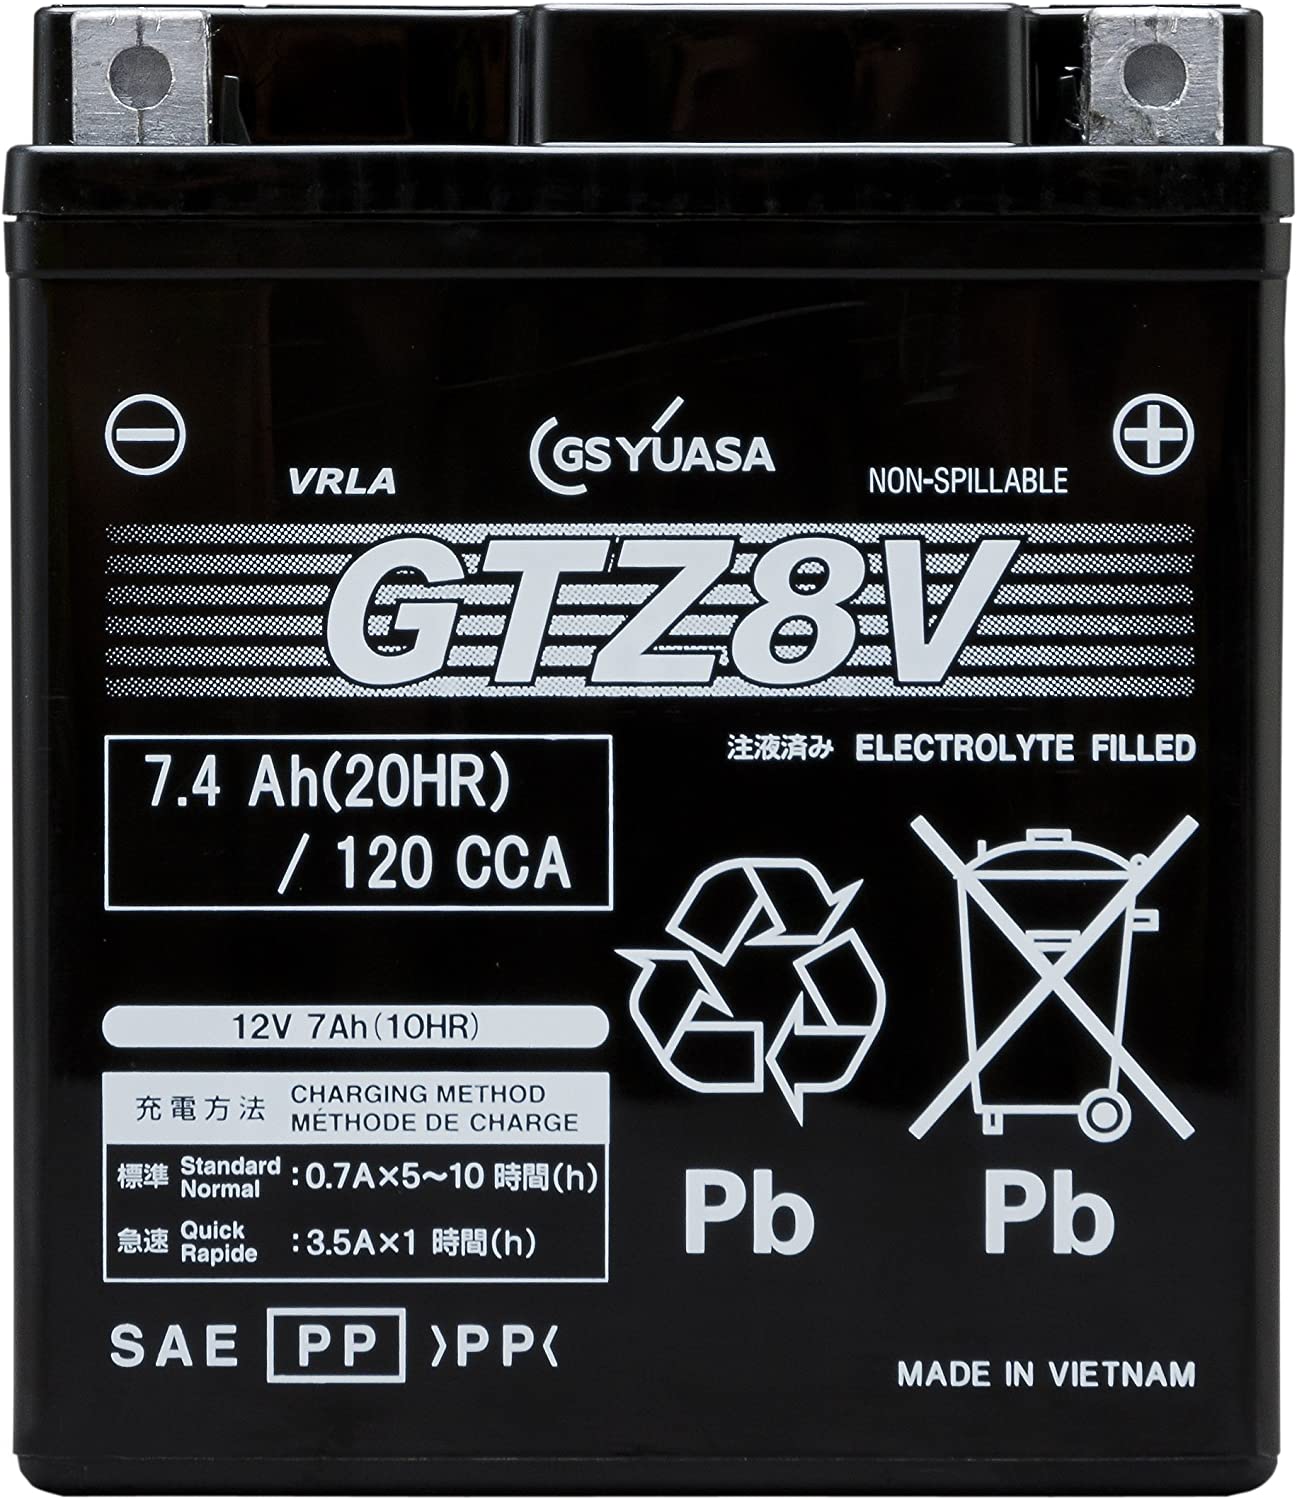 GTZ8V GS ユアサ VRLA 【制御弁式】 バイク 用 バッテリー ジーエスユアサ オートバイ 単車 スクーター ジーエス YUA…